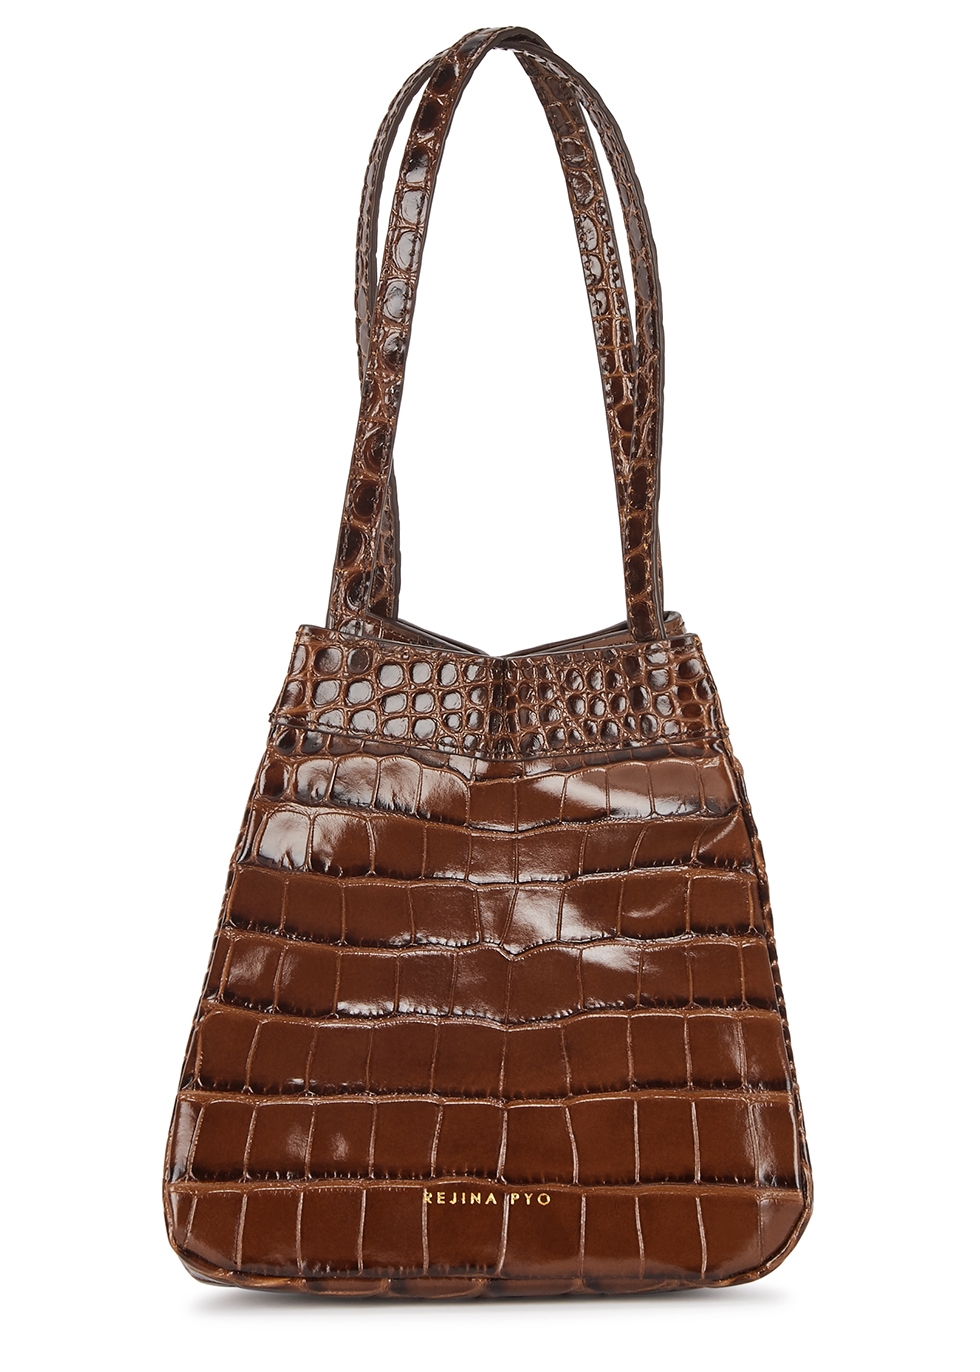 Rita crocodile-effect leather top handle bag